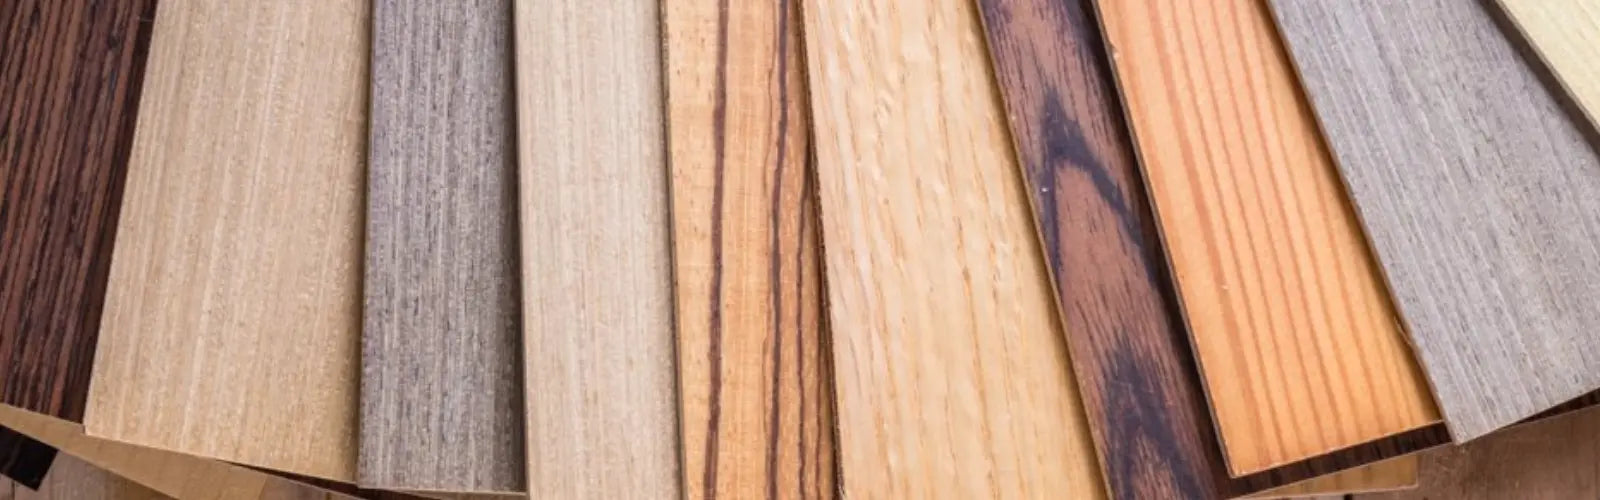 different type of wood veneer